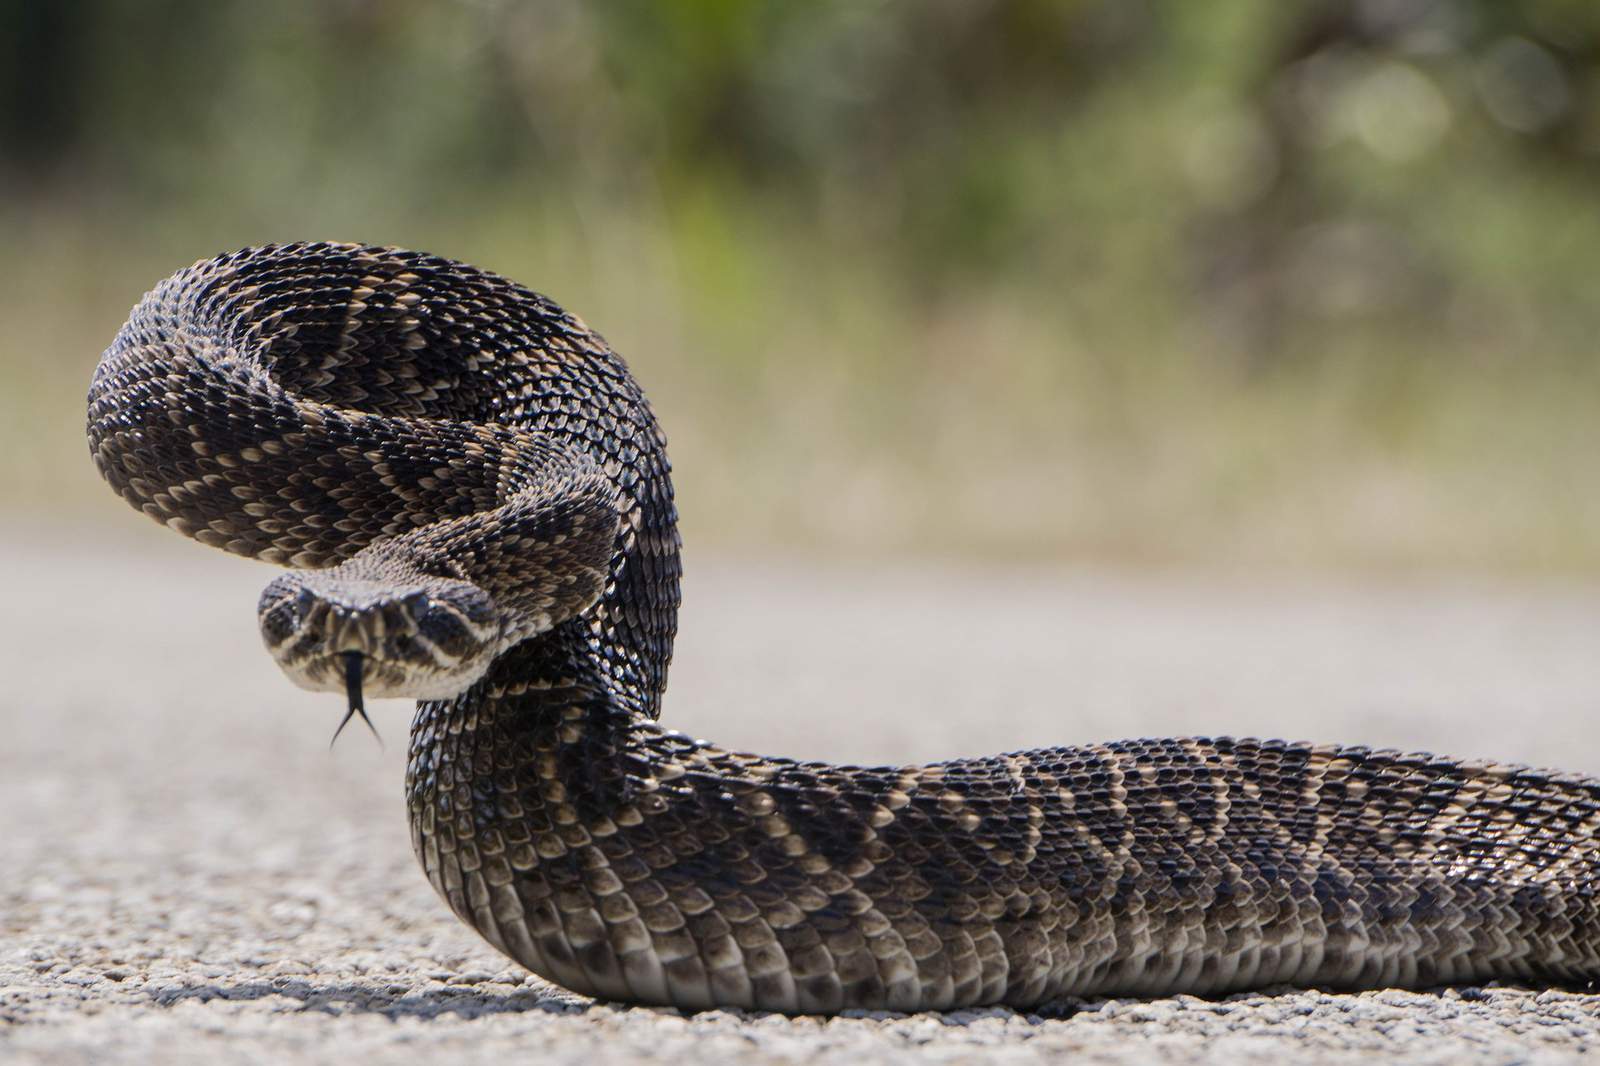 WATCH: Fierce battle between bobcat and rattlesnake in forest caught on video